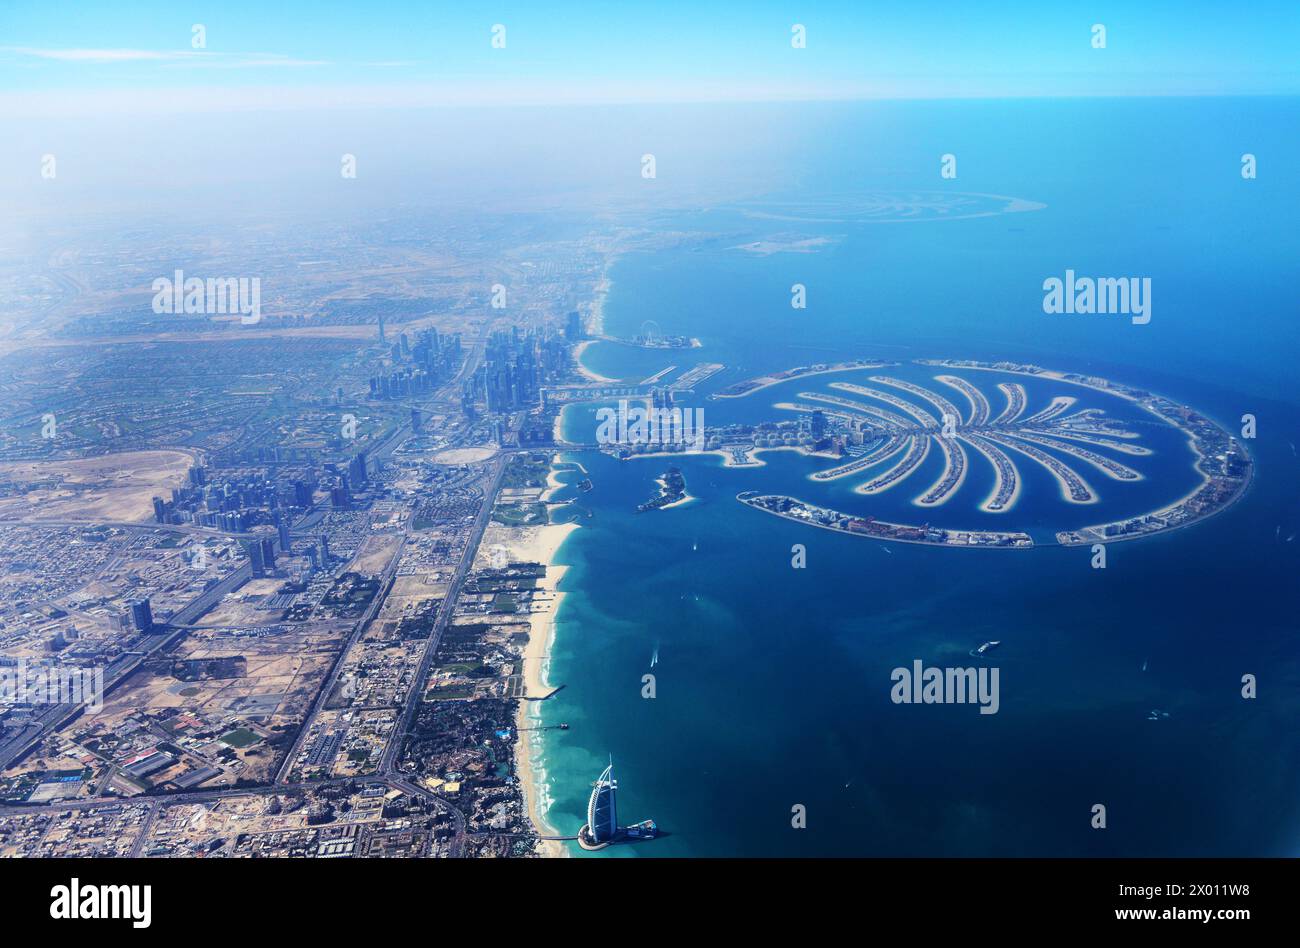 An Aerial view of Dubai's coastline with the Burj Al Arab hotel and the  Palm Jumeirah islands. Dubai, UAE. Stock Photo